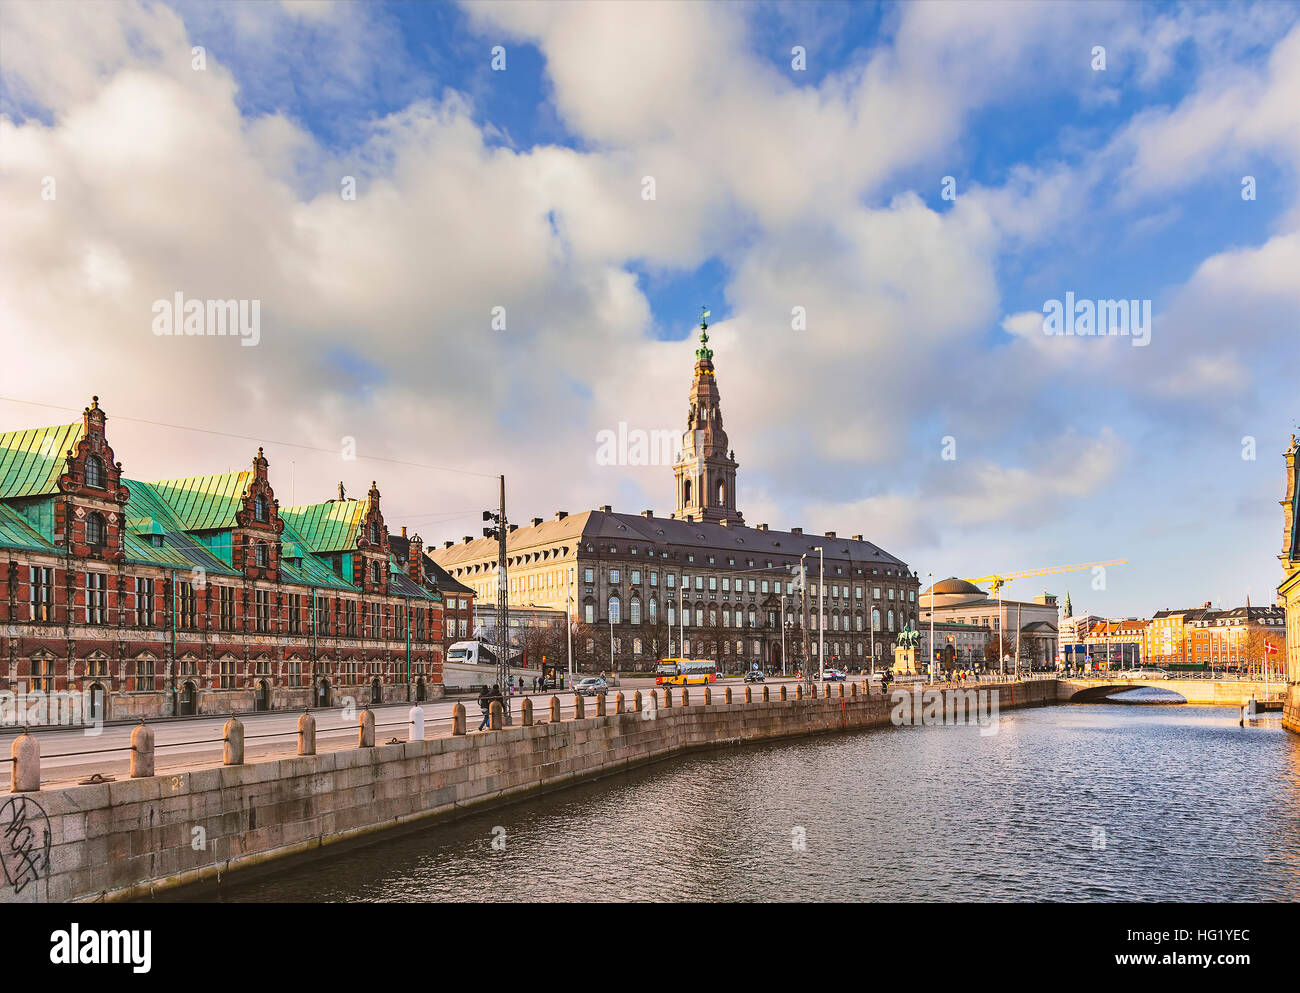 COPENNHAGEN, DÄNEMARK - 24. DEZEMBER 2016. Eines der ältesten Börsen in Europa, erbaut 1624. Als nächstes liegt Schloss Christiansborg. Stockfoto